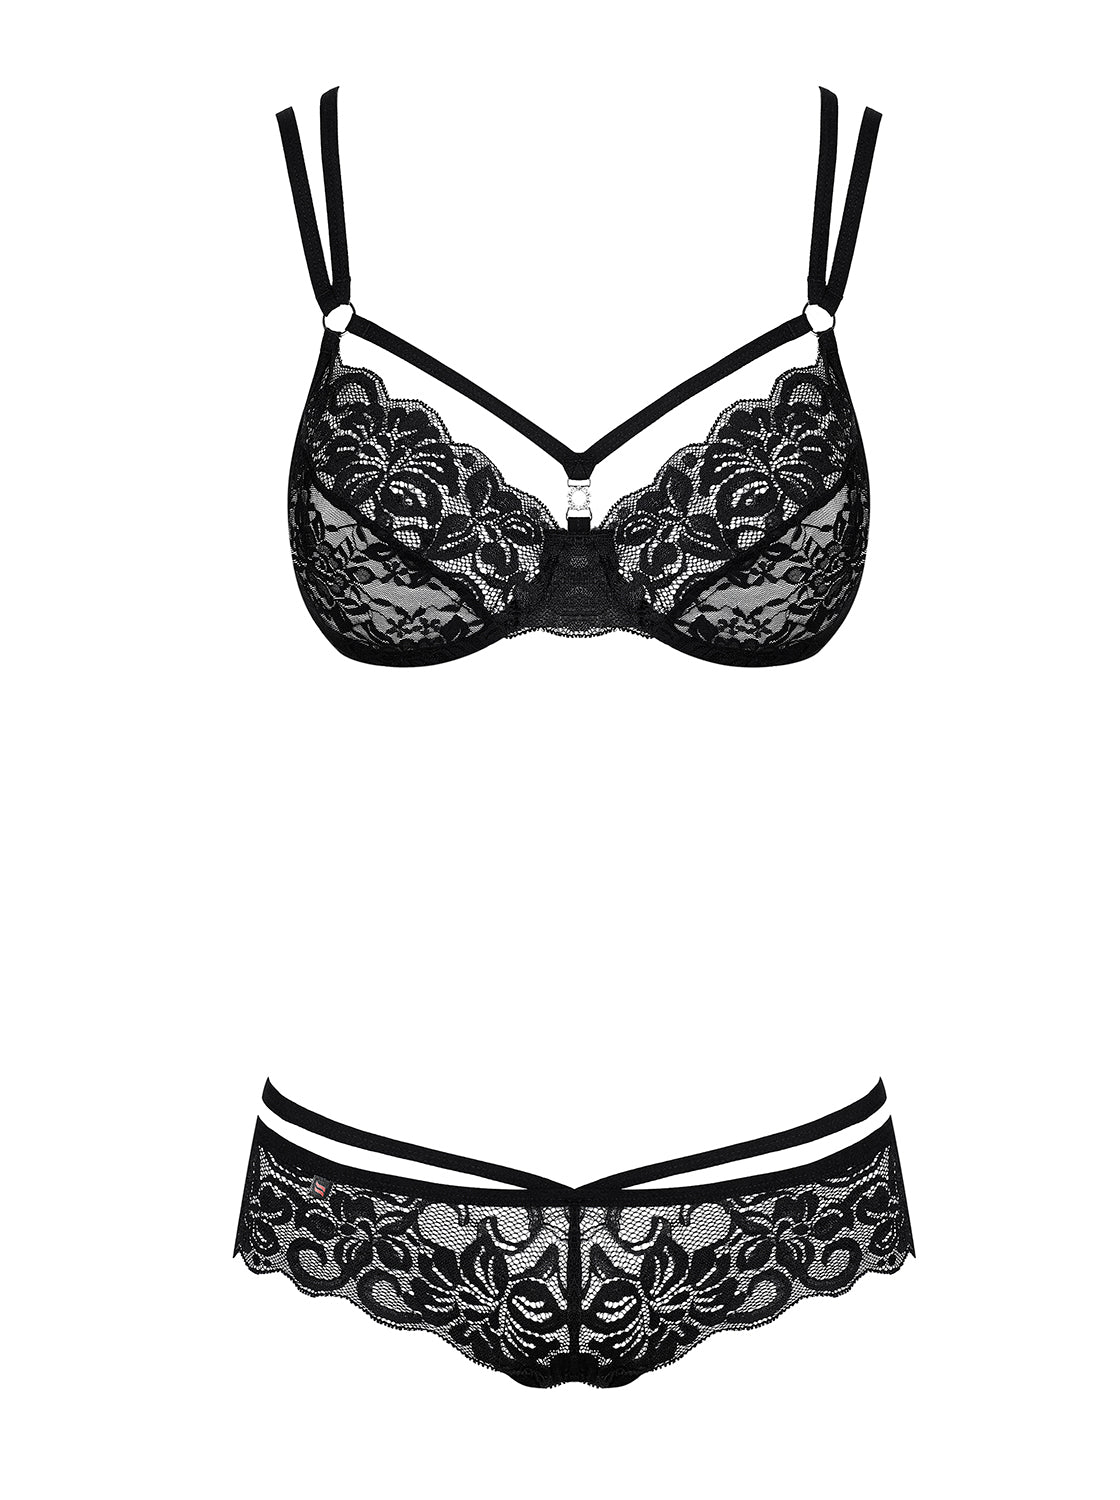 Sensual bra set made of black lace with beautiful rose pattern